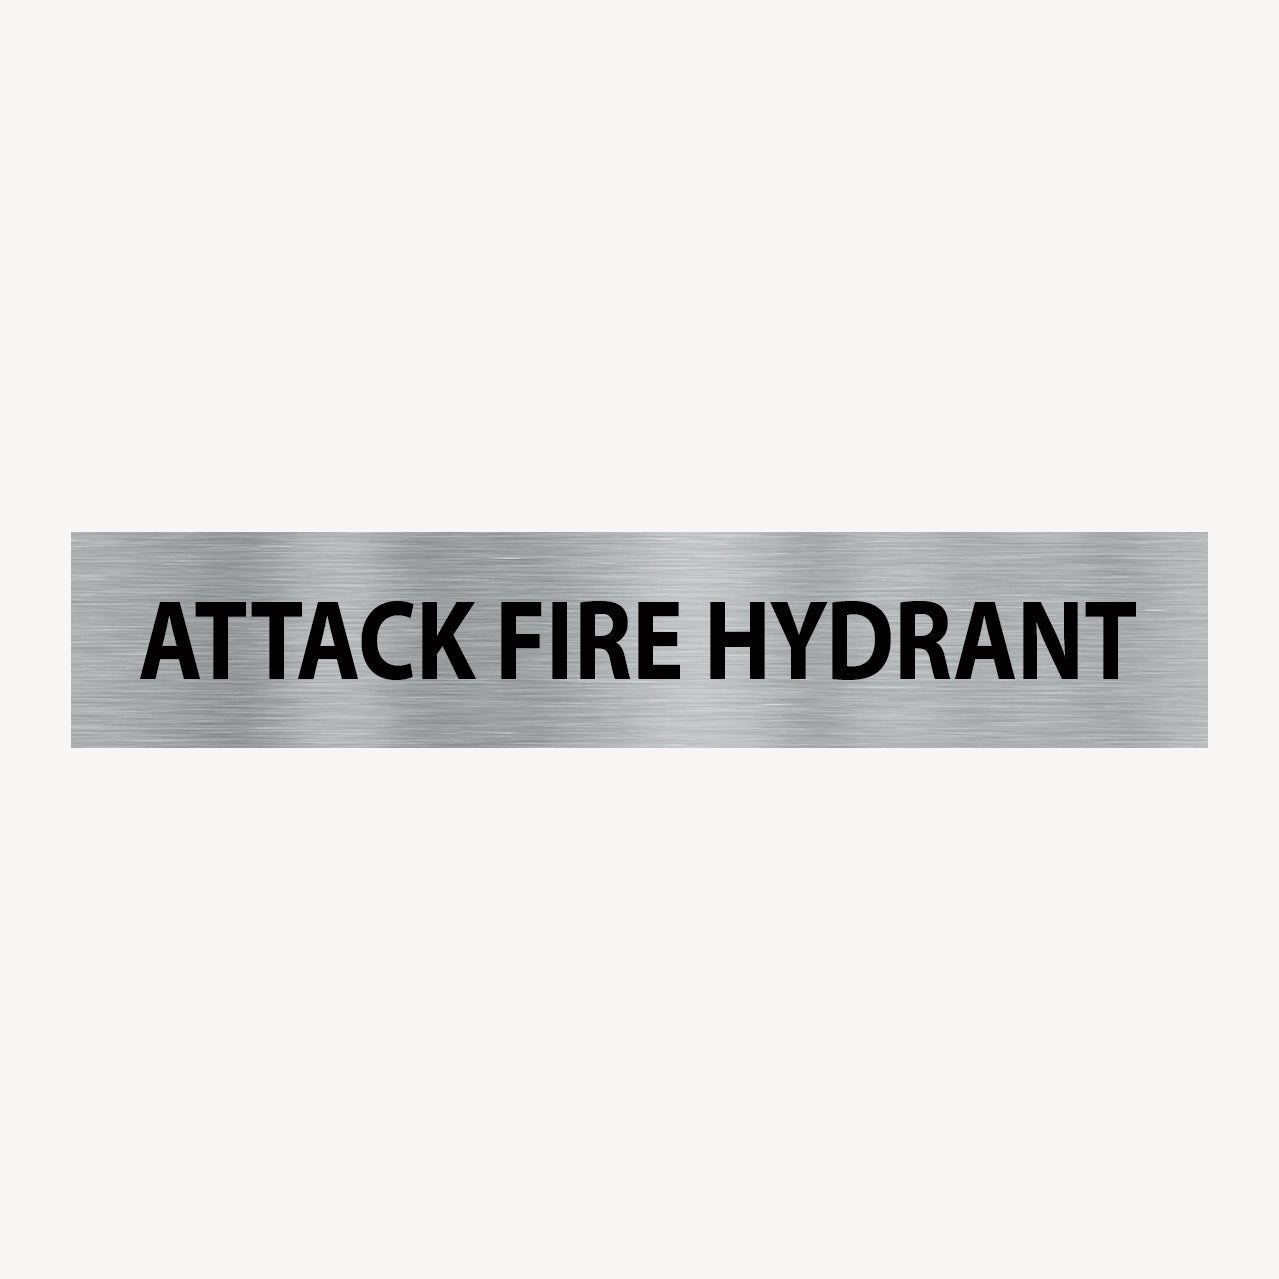 ATTACK FIRE HYDRANT SIGN